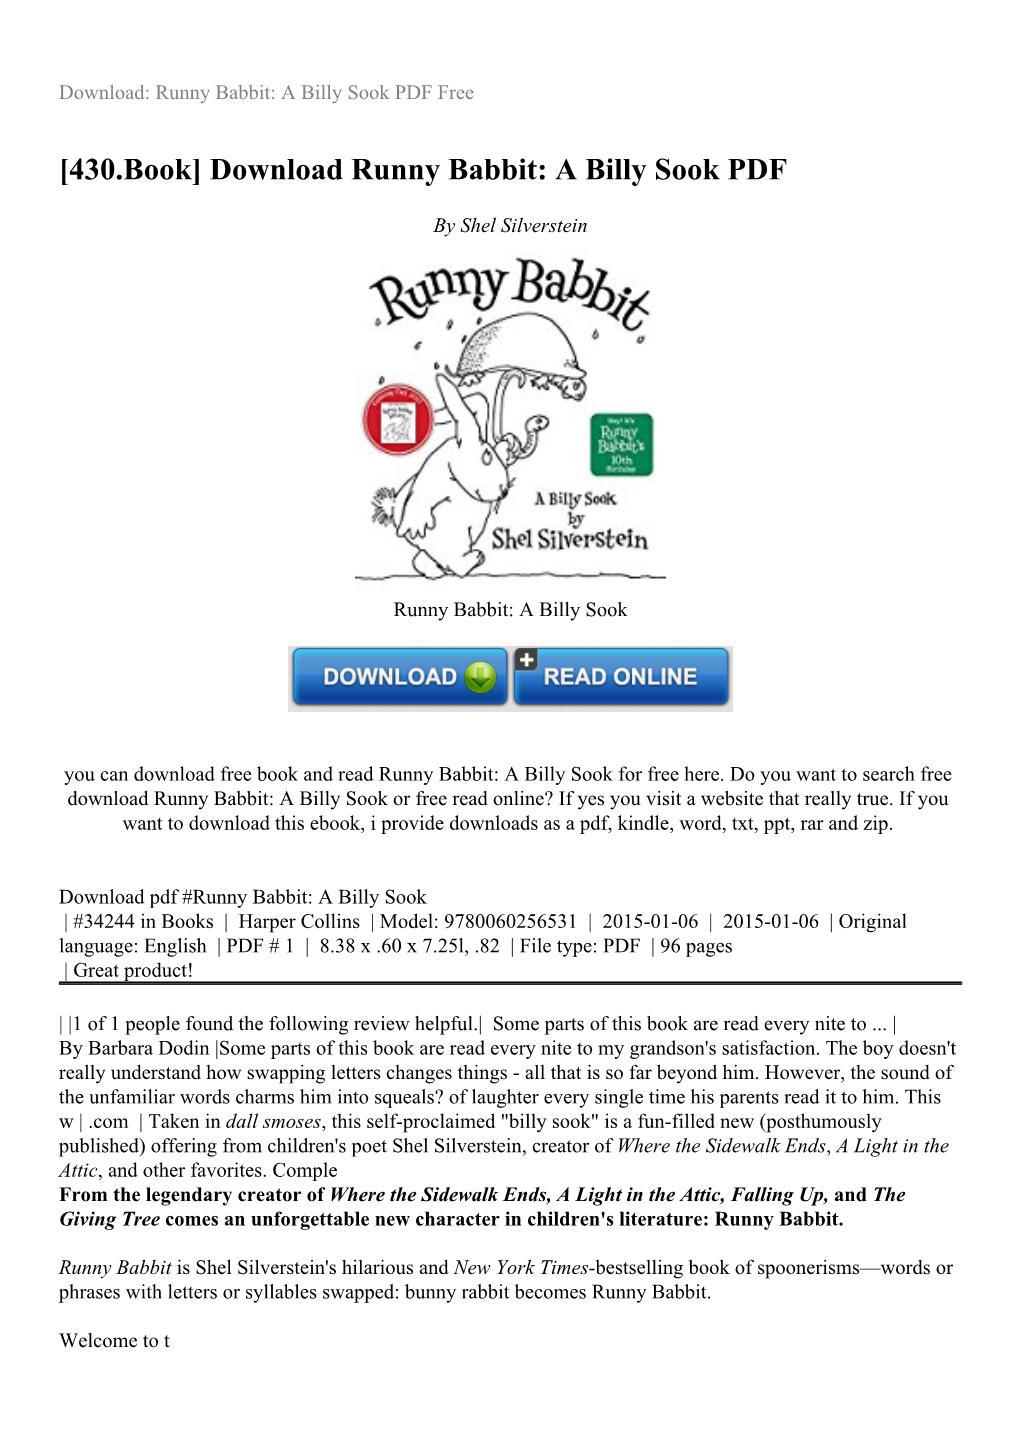 Download Runny Babbit: a Billy Sook PDF